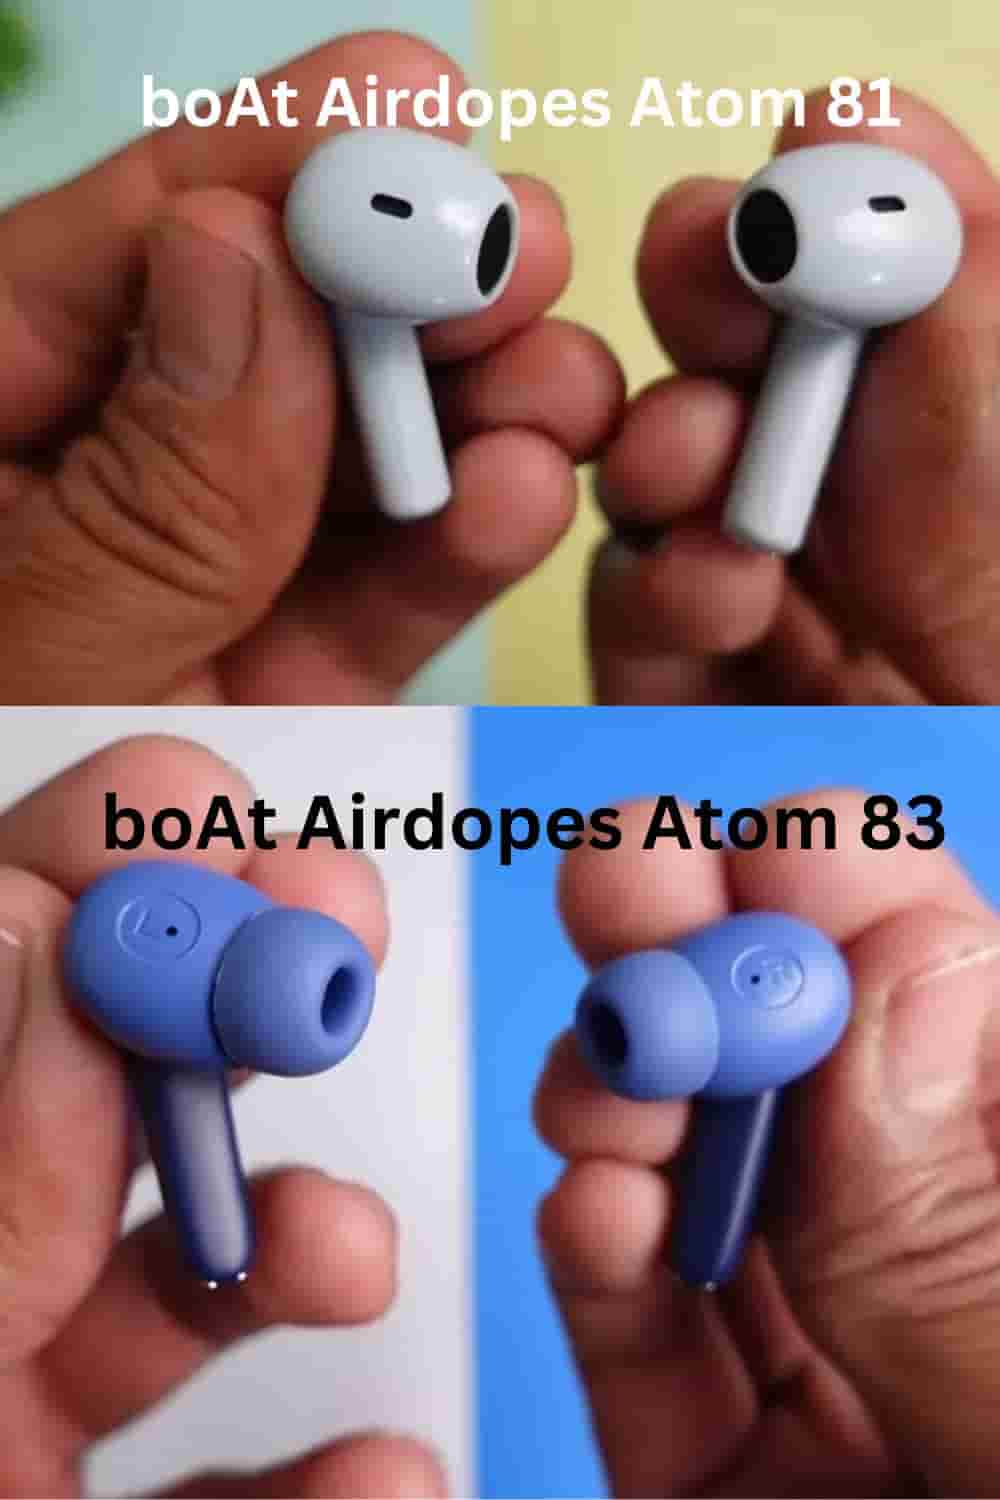 Buds design comparison between boAt Airdopes Atom 81 and Atom 83